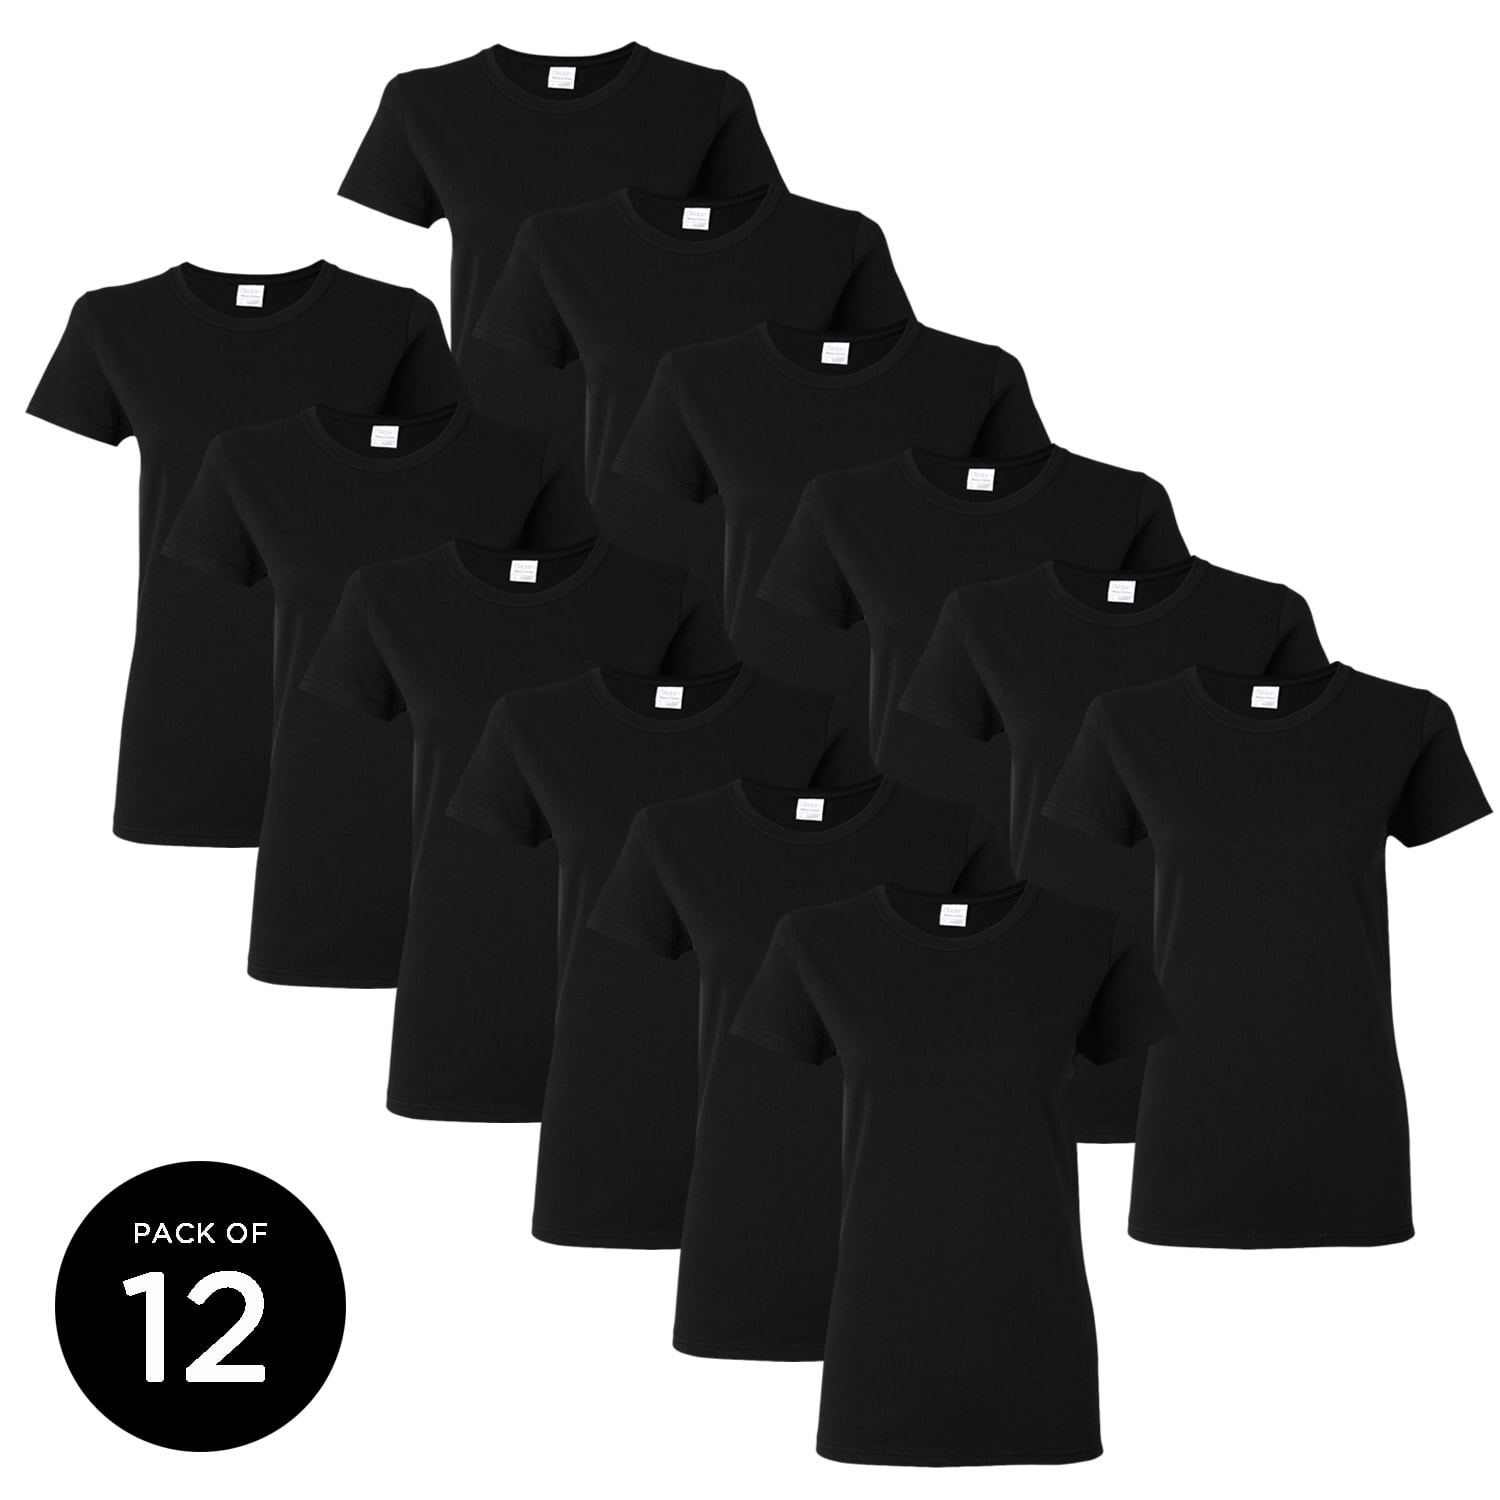 Gildan Black Women T-Shirts Value Shirts for Women - Single OR Pack of 6 OR Pack of 12 Black Shirts for Women Gildan for Women Black shirt Casual Shirt Basic